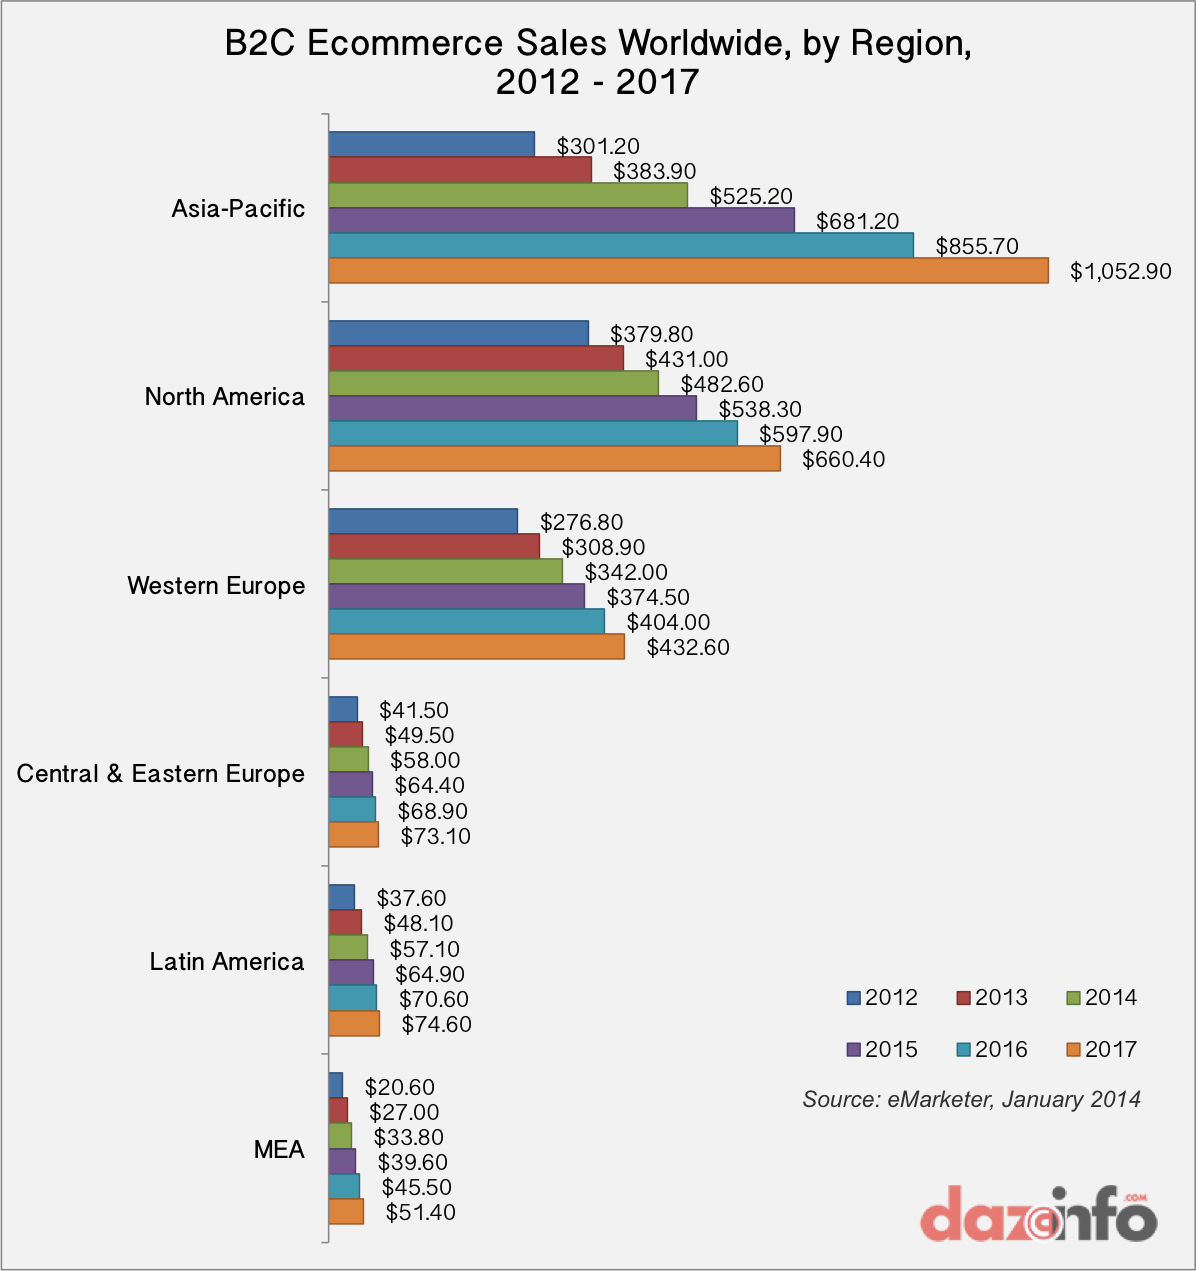 B2C Ecommerce sales by region 2012 - 2017